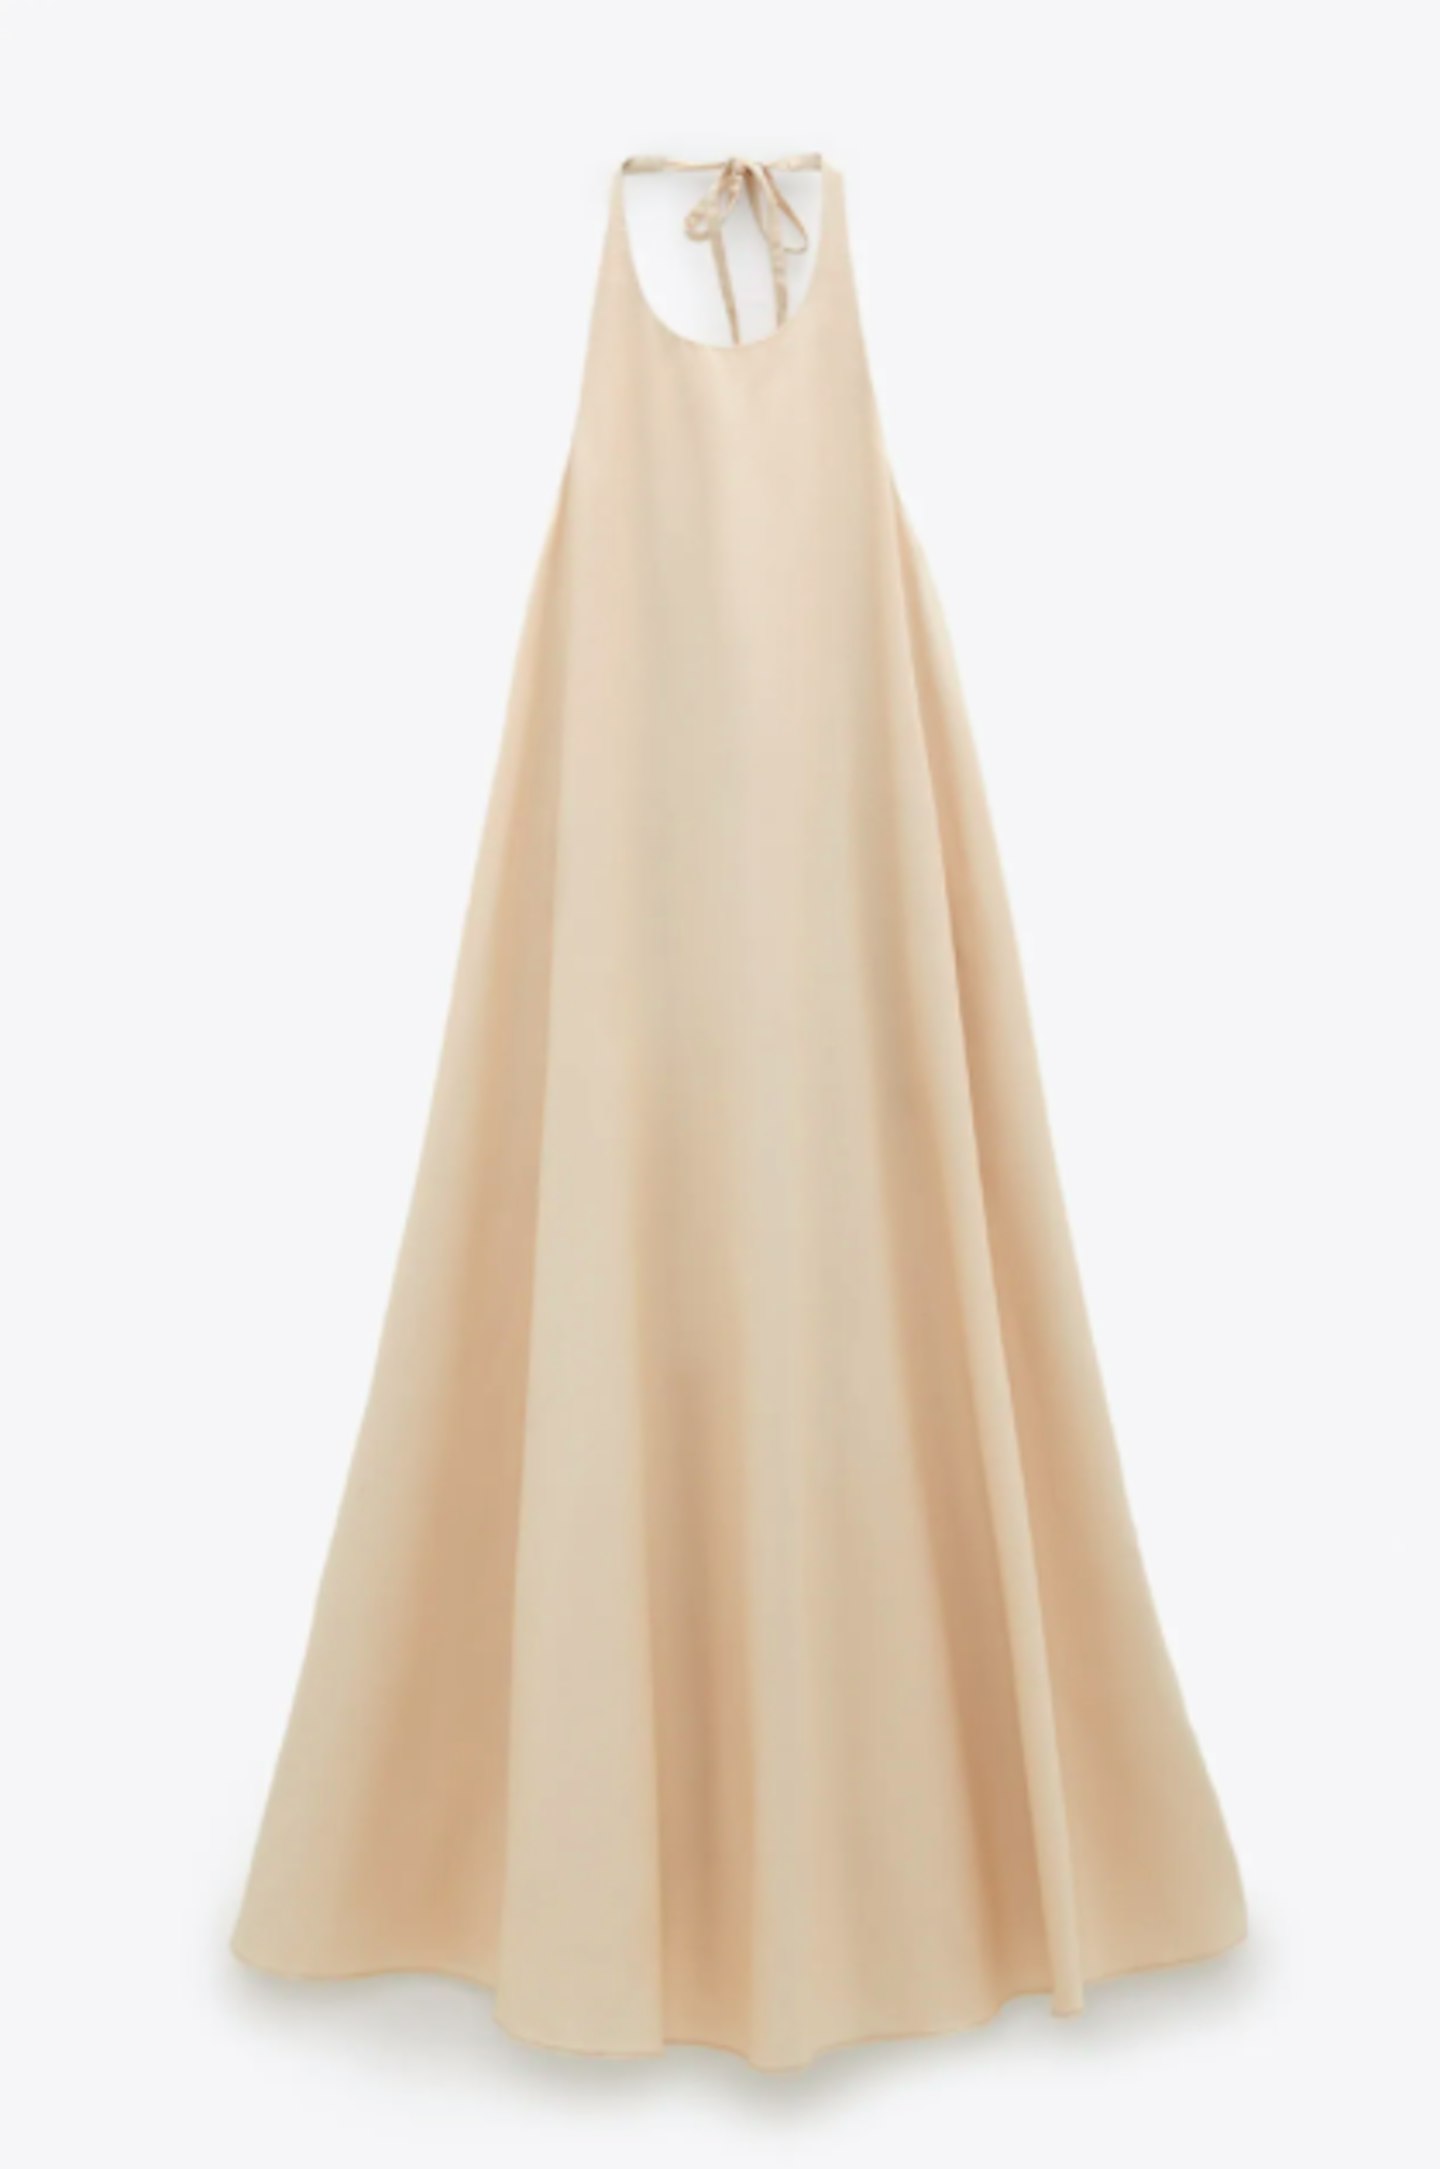 Zara, Halter Neck Dress, £29.99